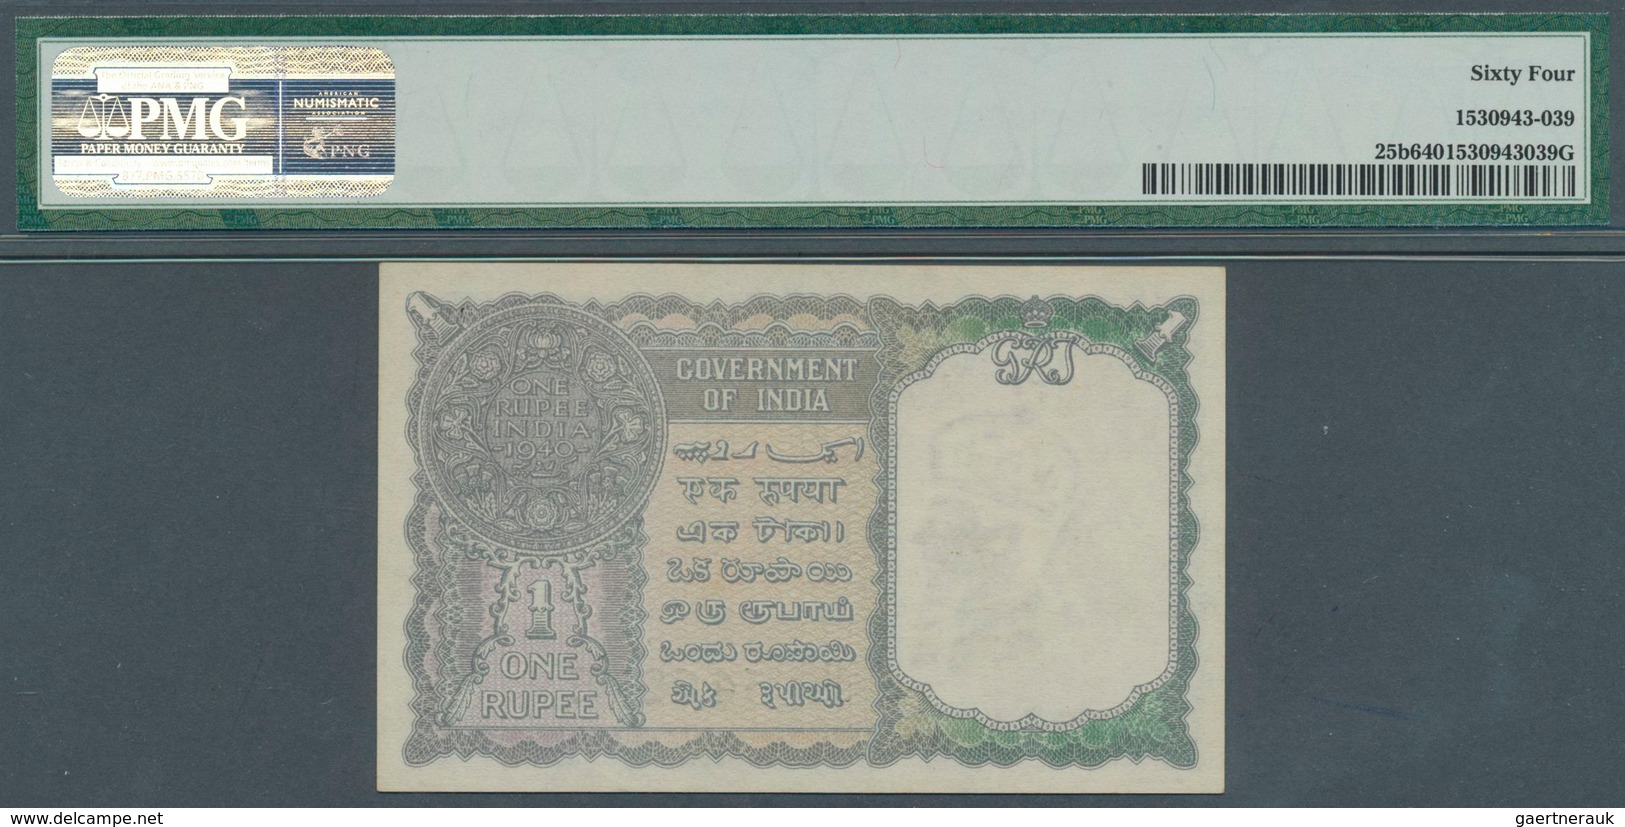 01232 Burma / Myanmar / Birma: 1 Rupee ND(1945) P. 25b, Condition: PMG Graded 64 Choice UNC. - Myanmar